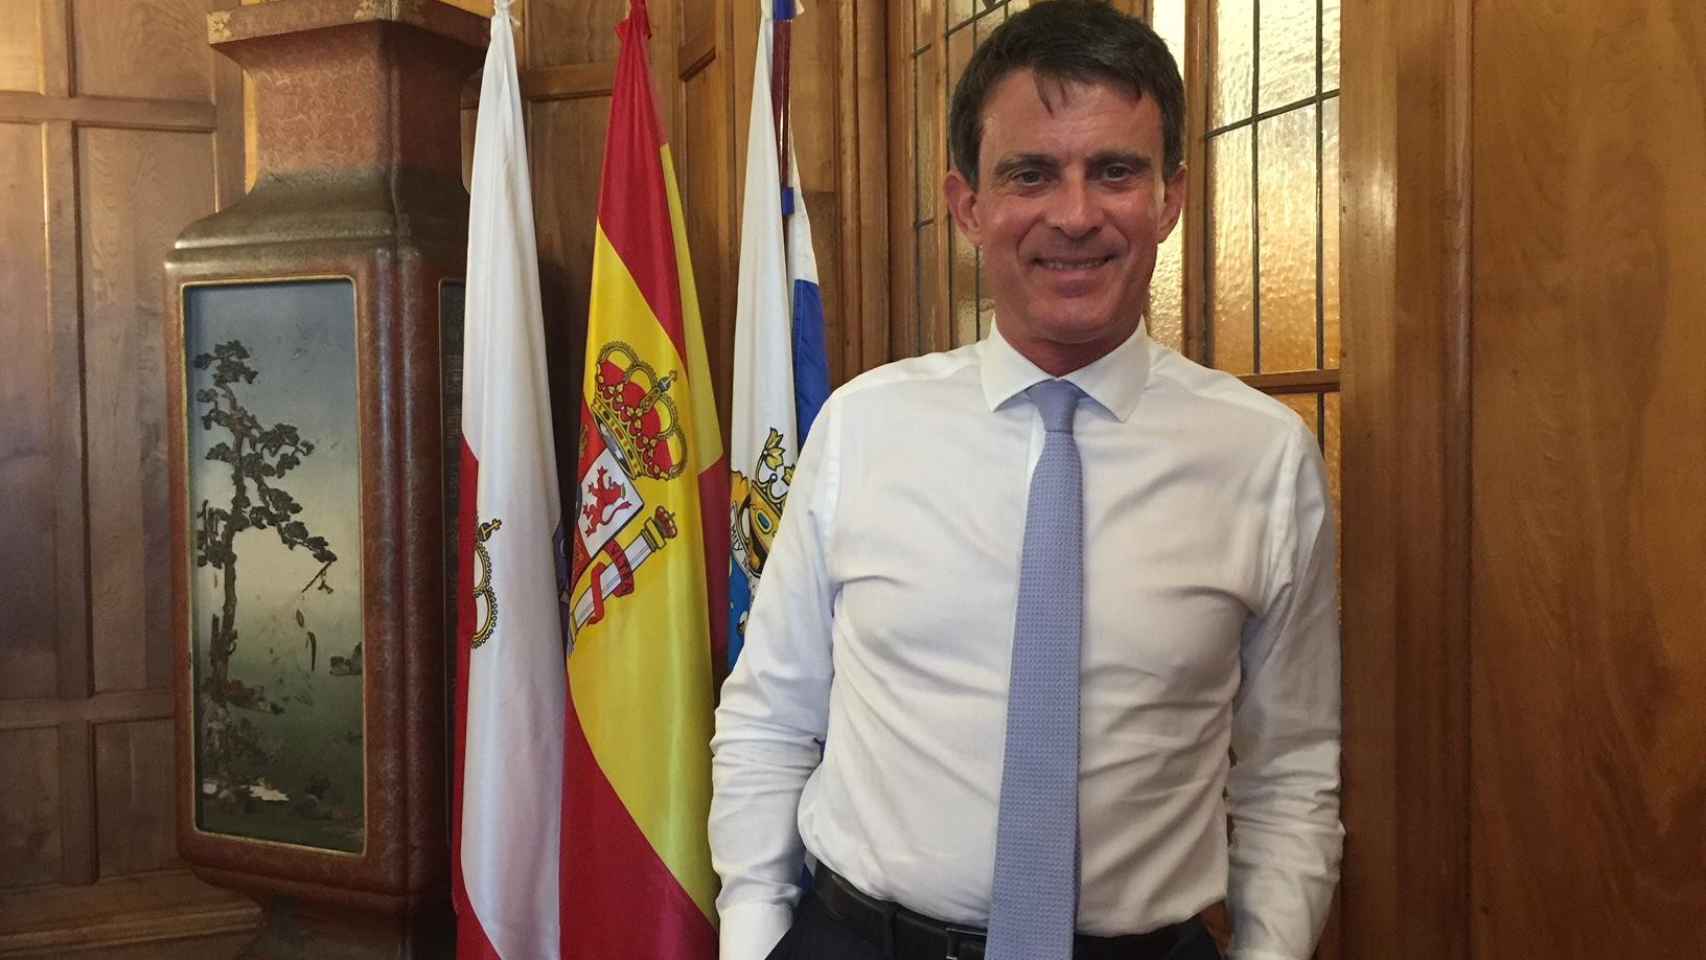 El exprimer ministro francés, Manuel Valls, en un encuentro en Santander /CG